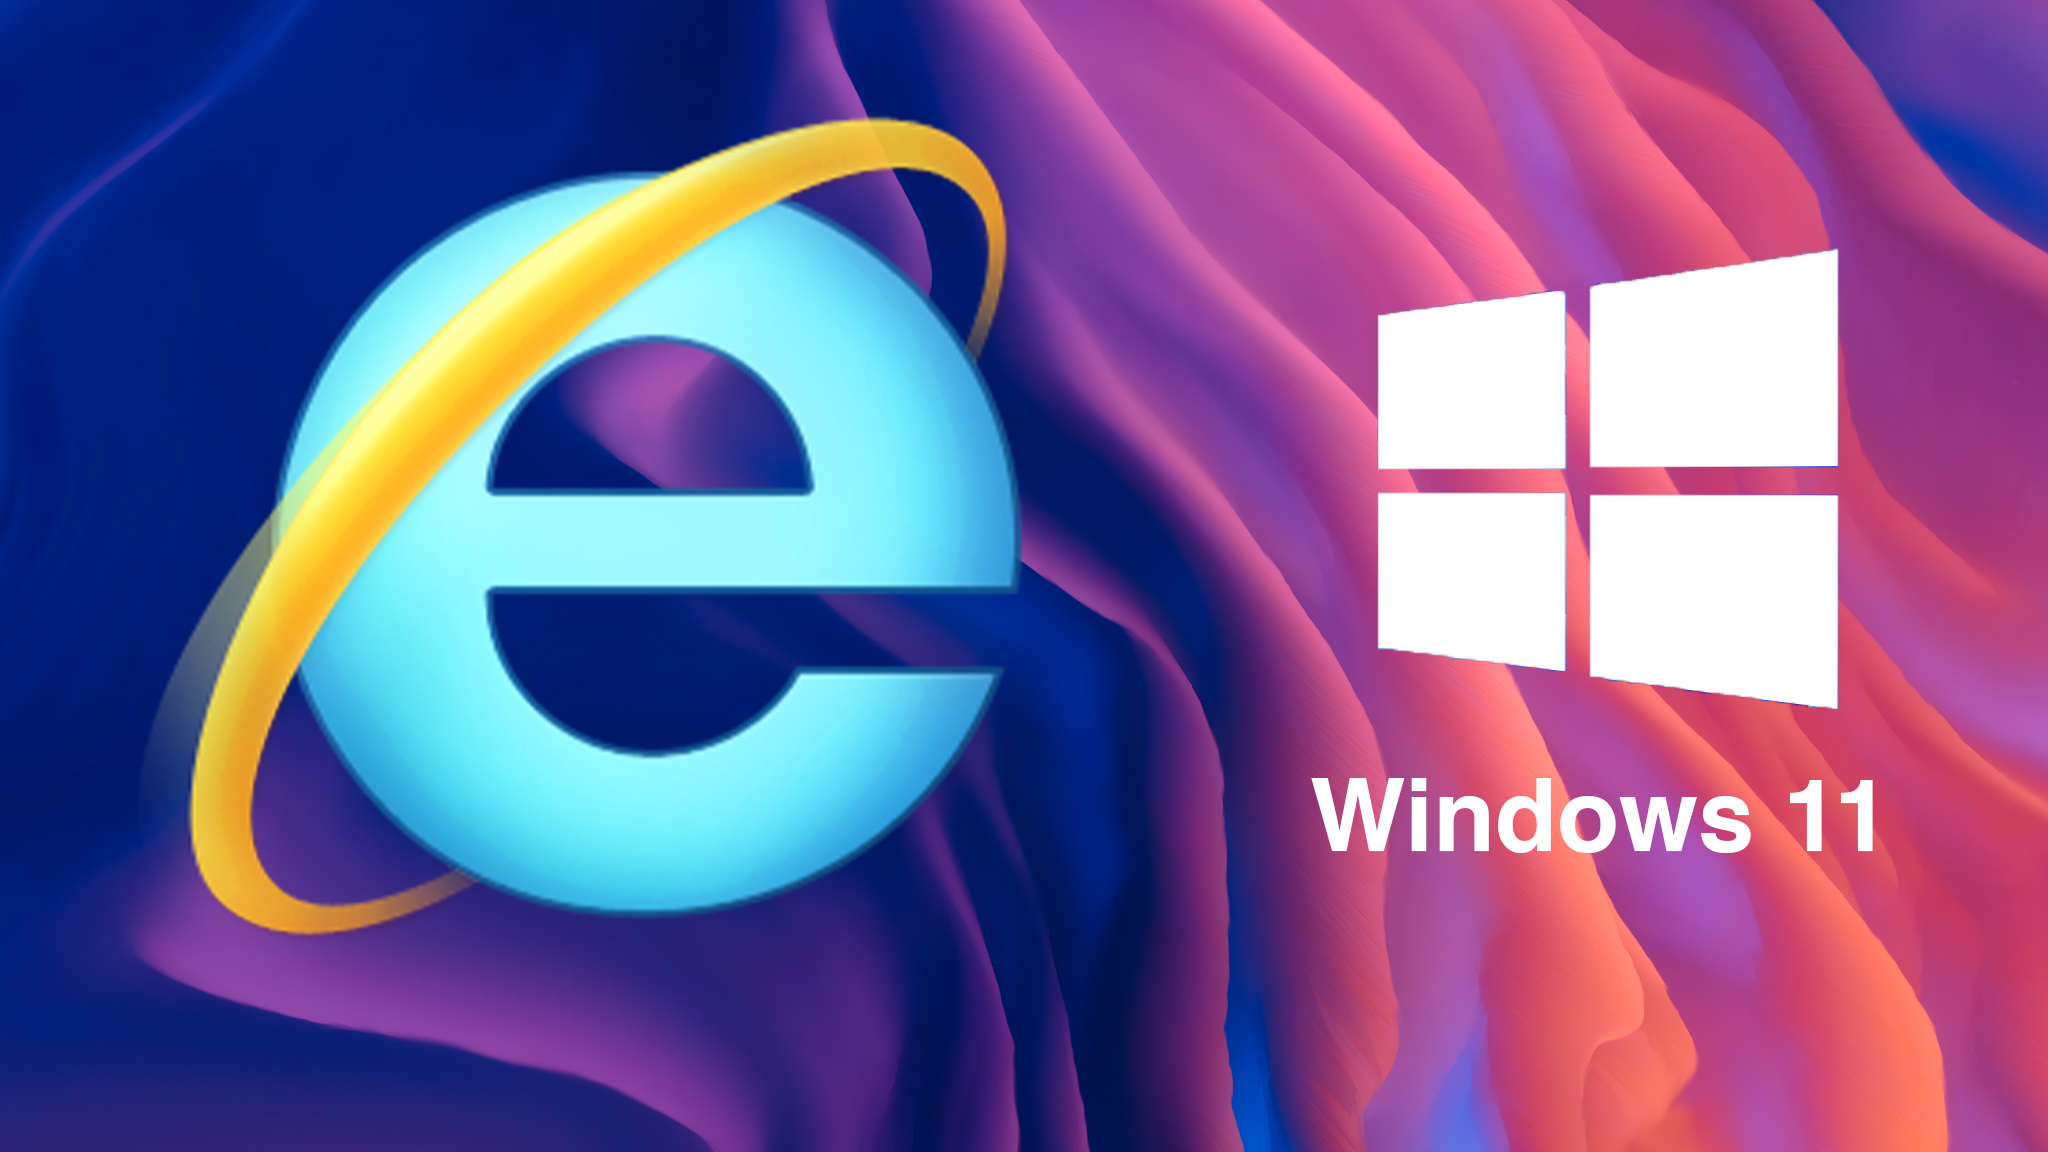 Windows 11: Start Internet Explorer – That’s How You Keep Using It